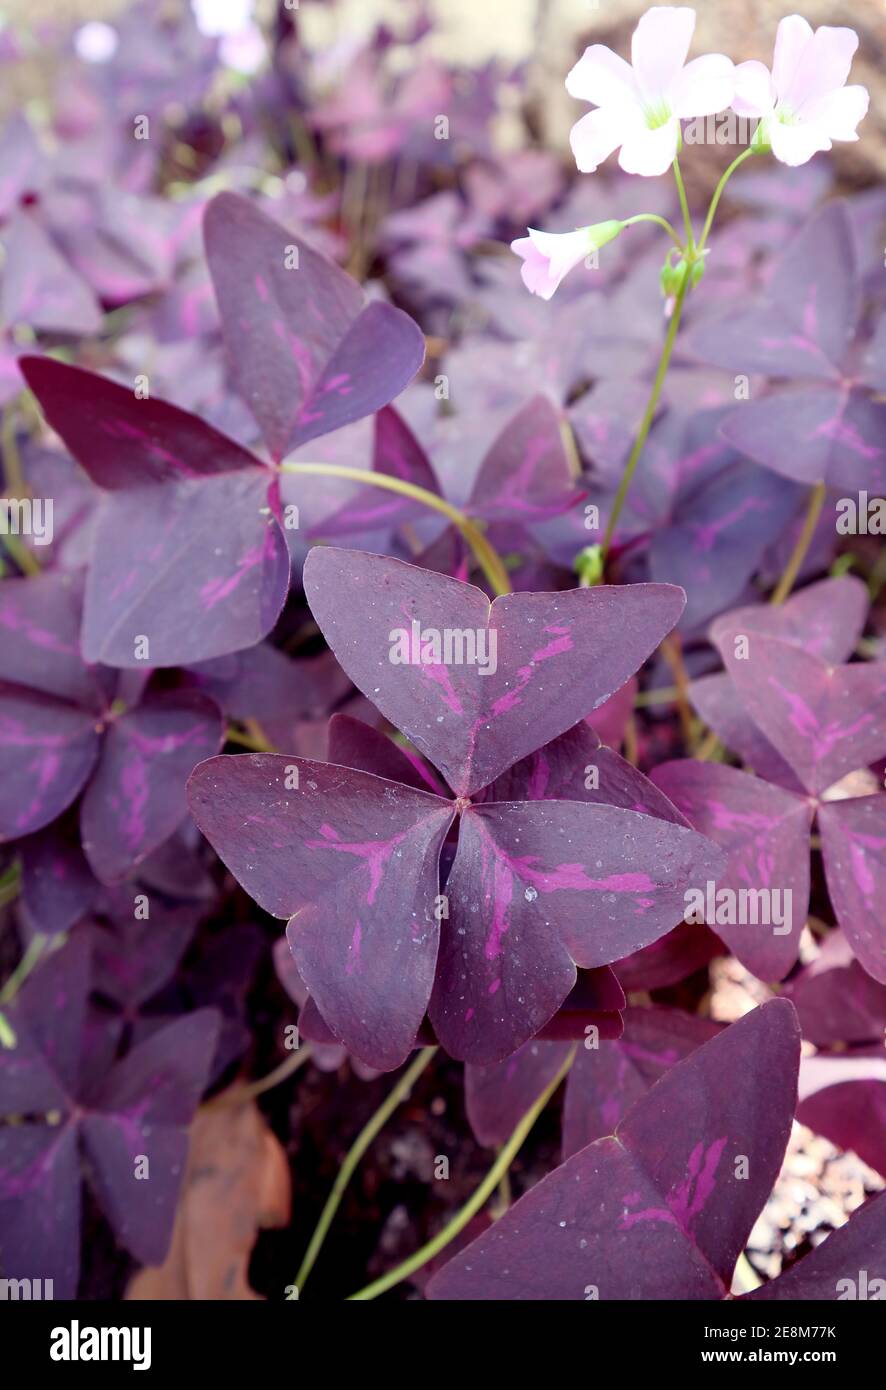 Lila shamrock pflanze -Fotos und -Bildmaterial in hoher Auflösung – Alamy